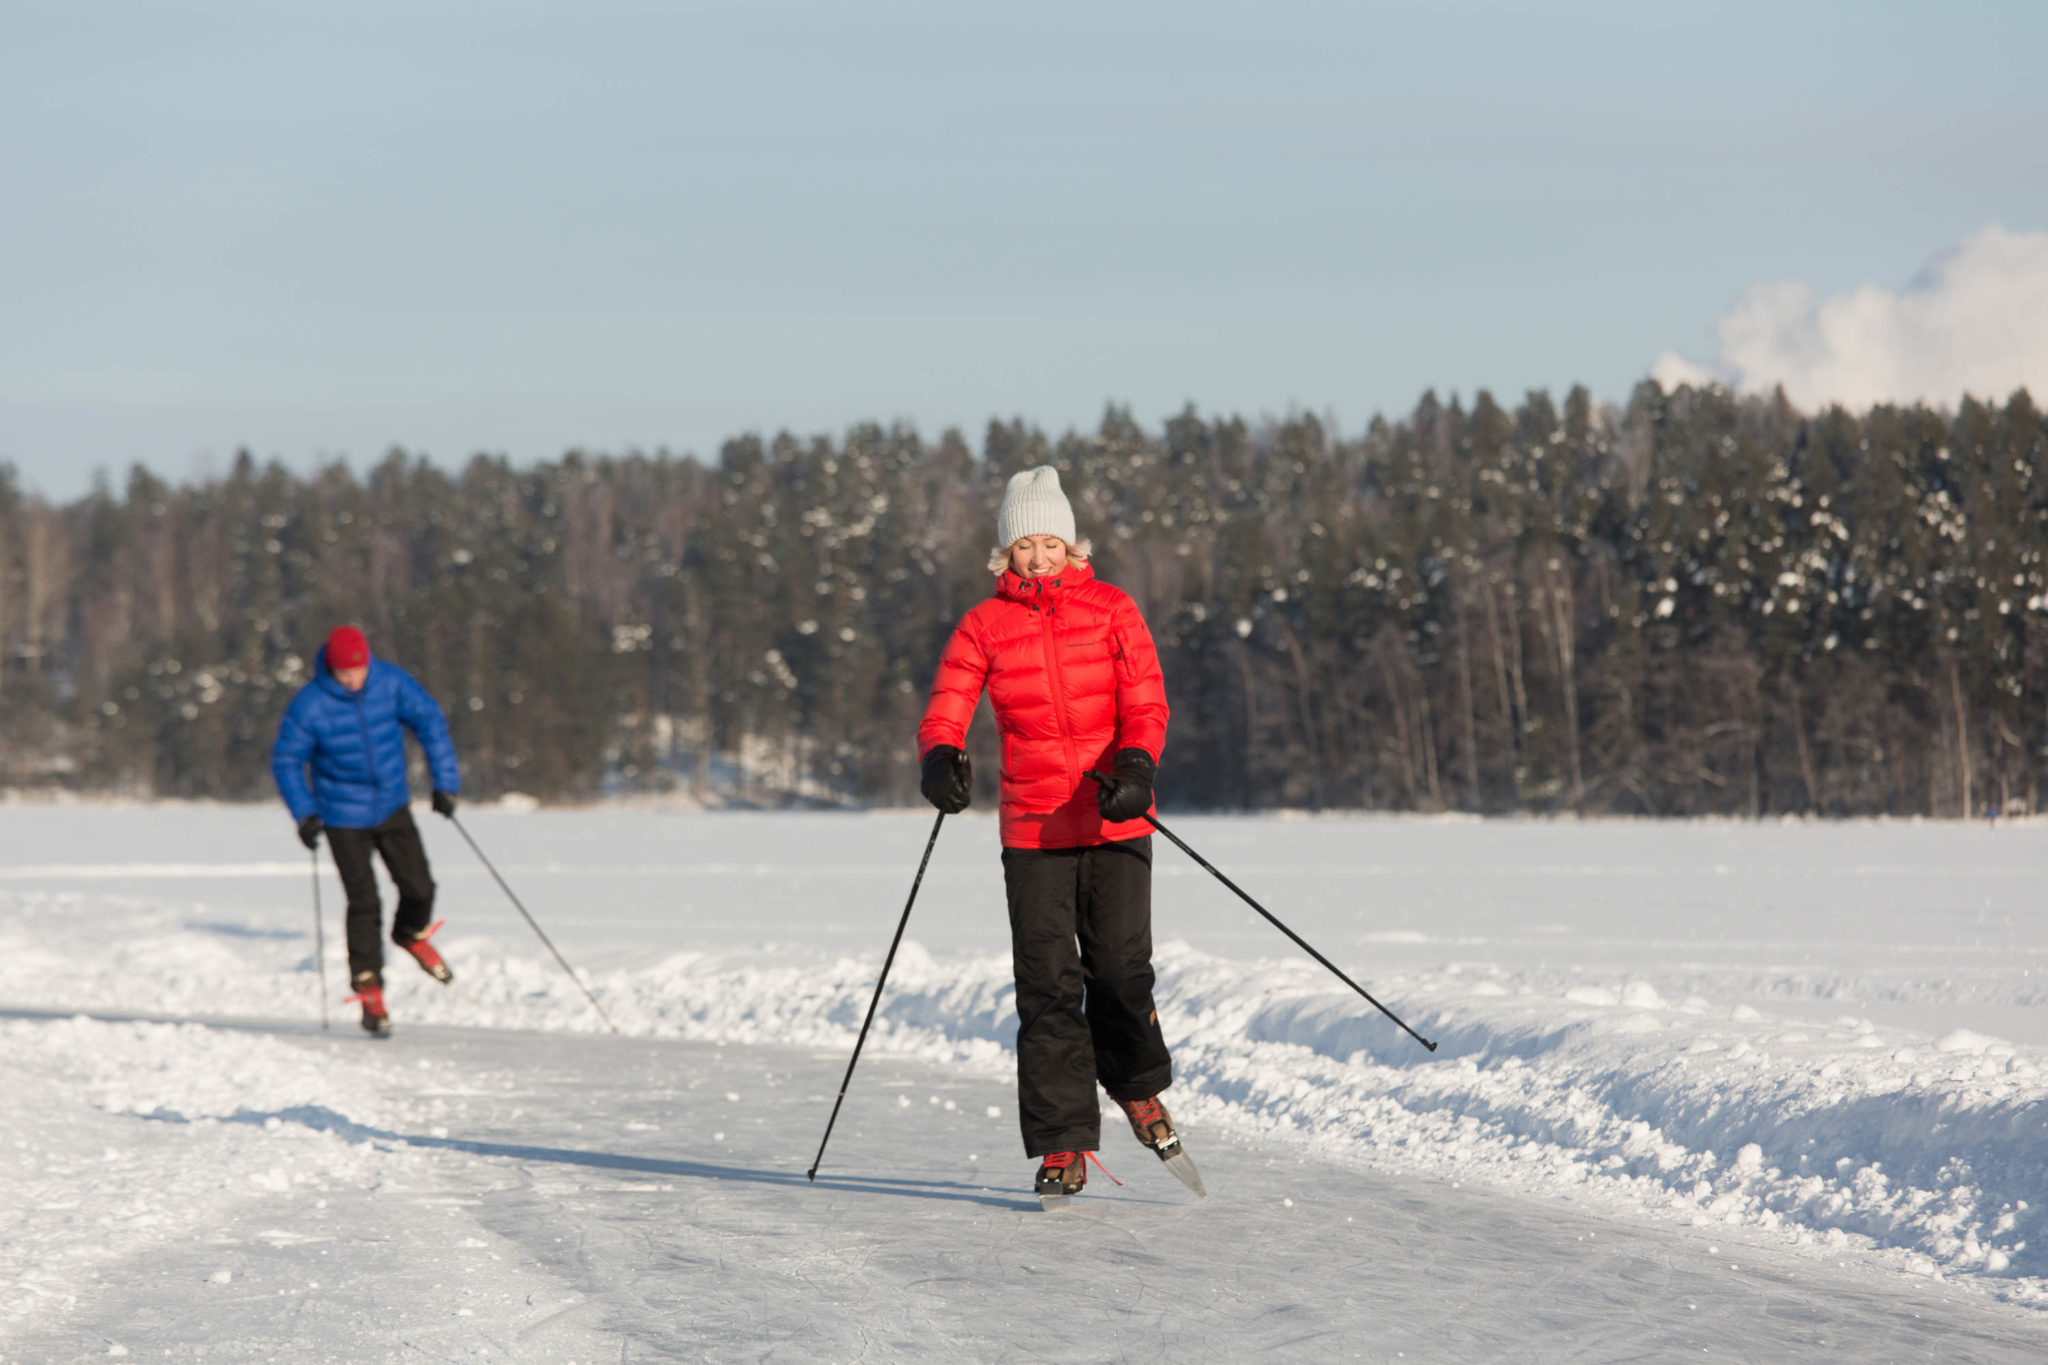 Winter holidays by Lake Saimaa, Finland